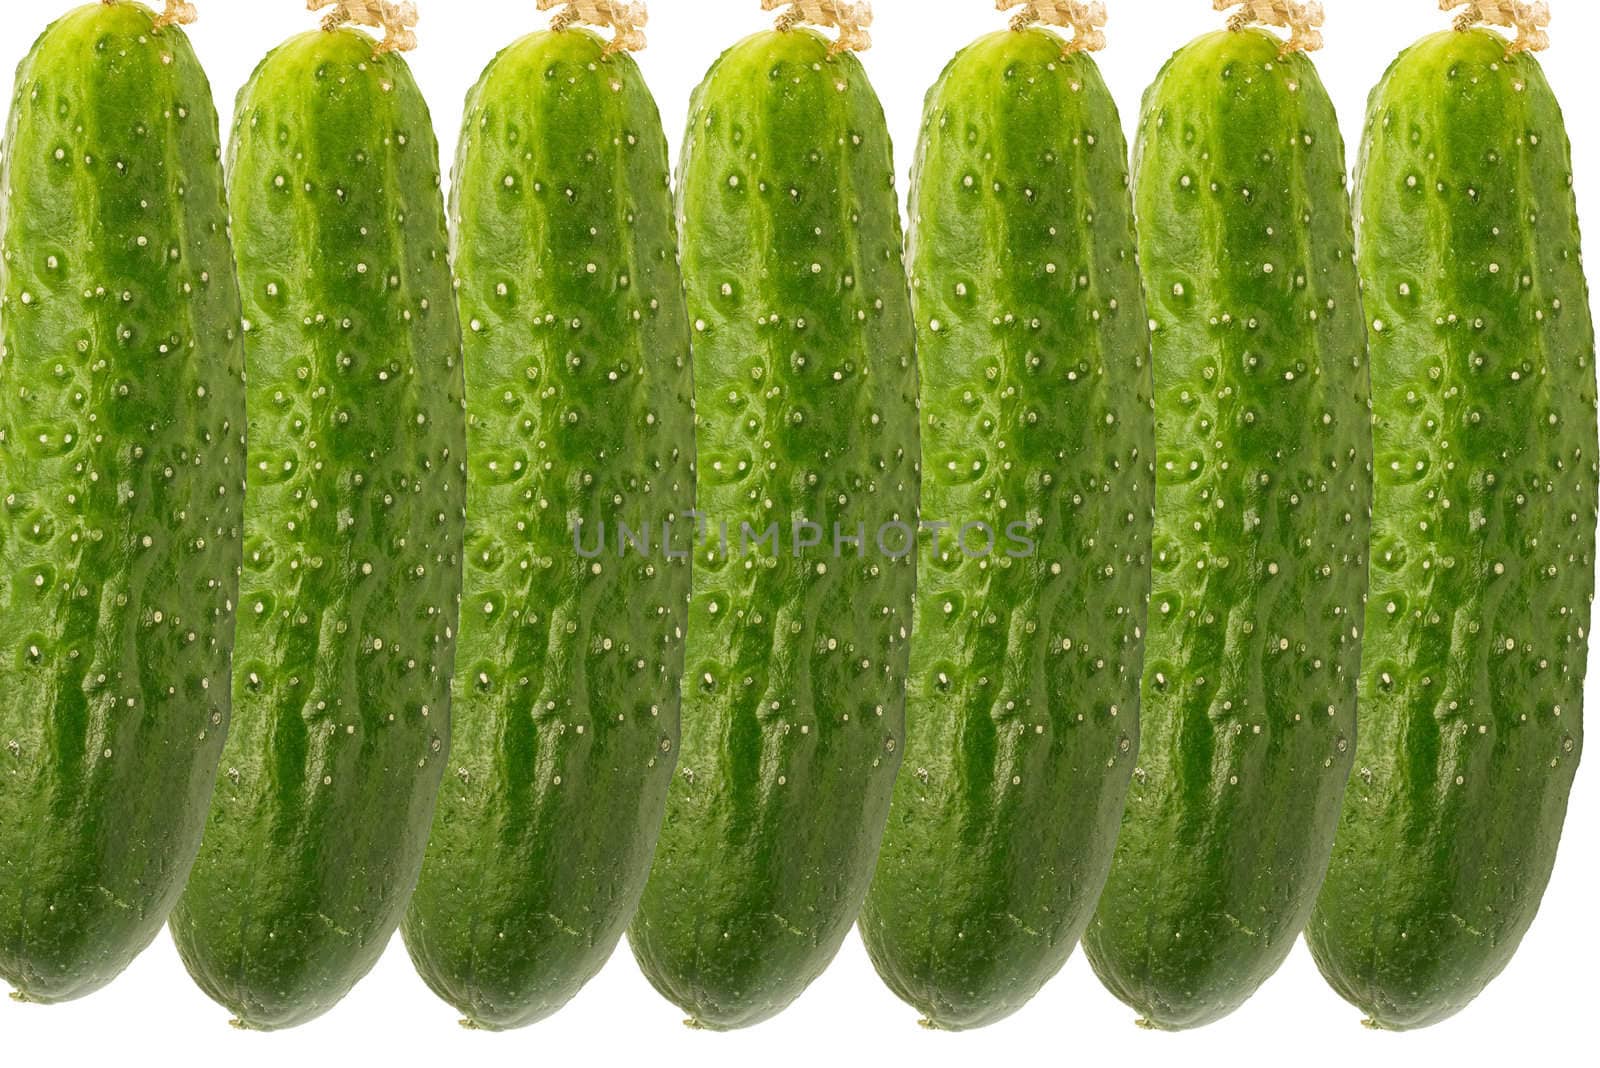   Green cucumbers background
